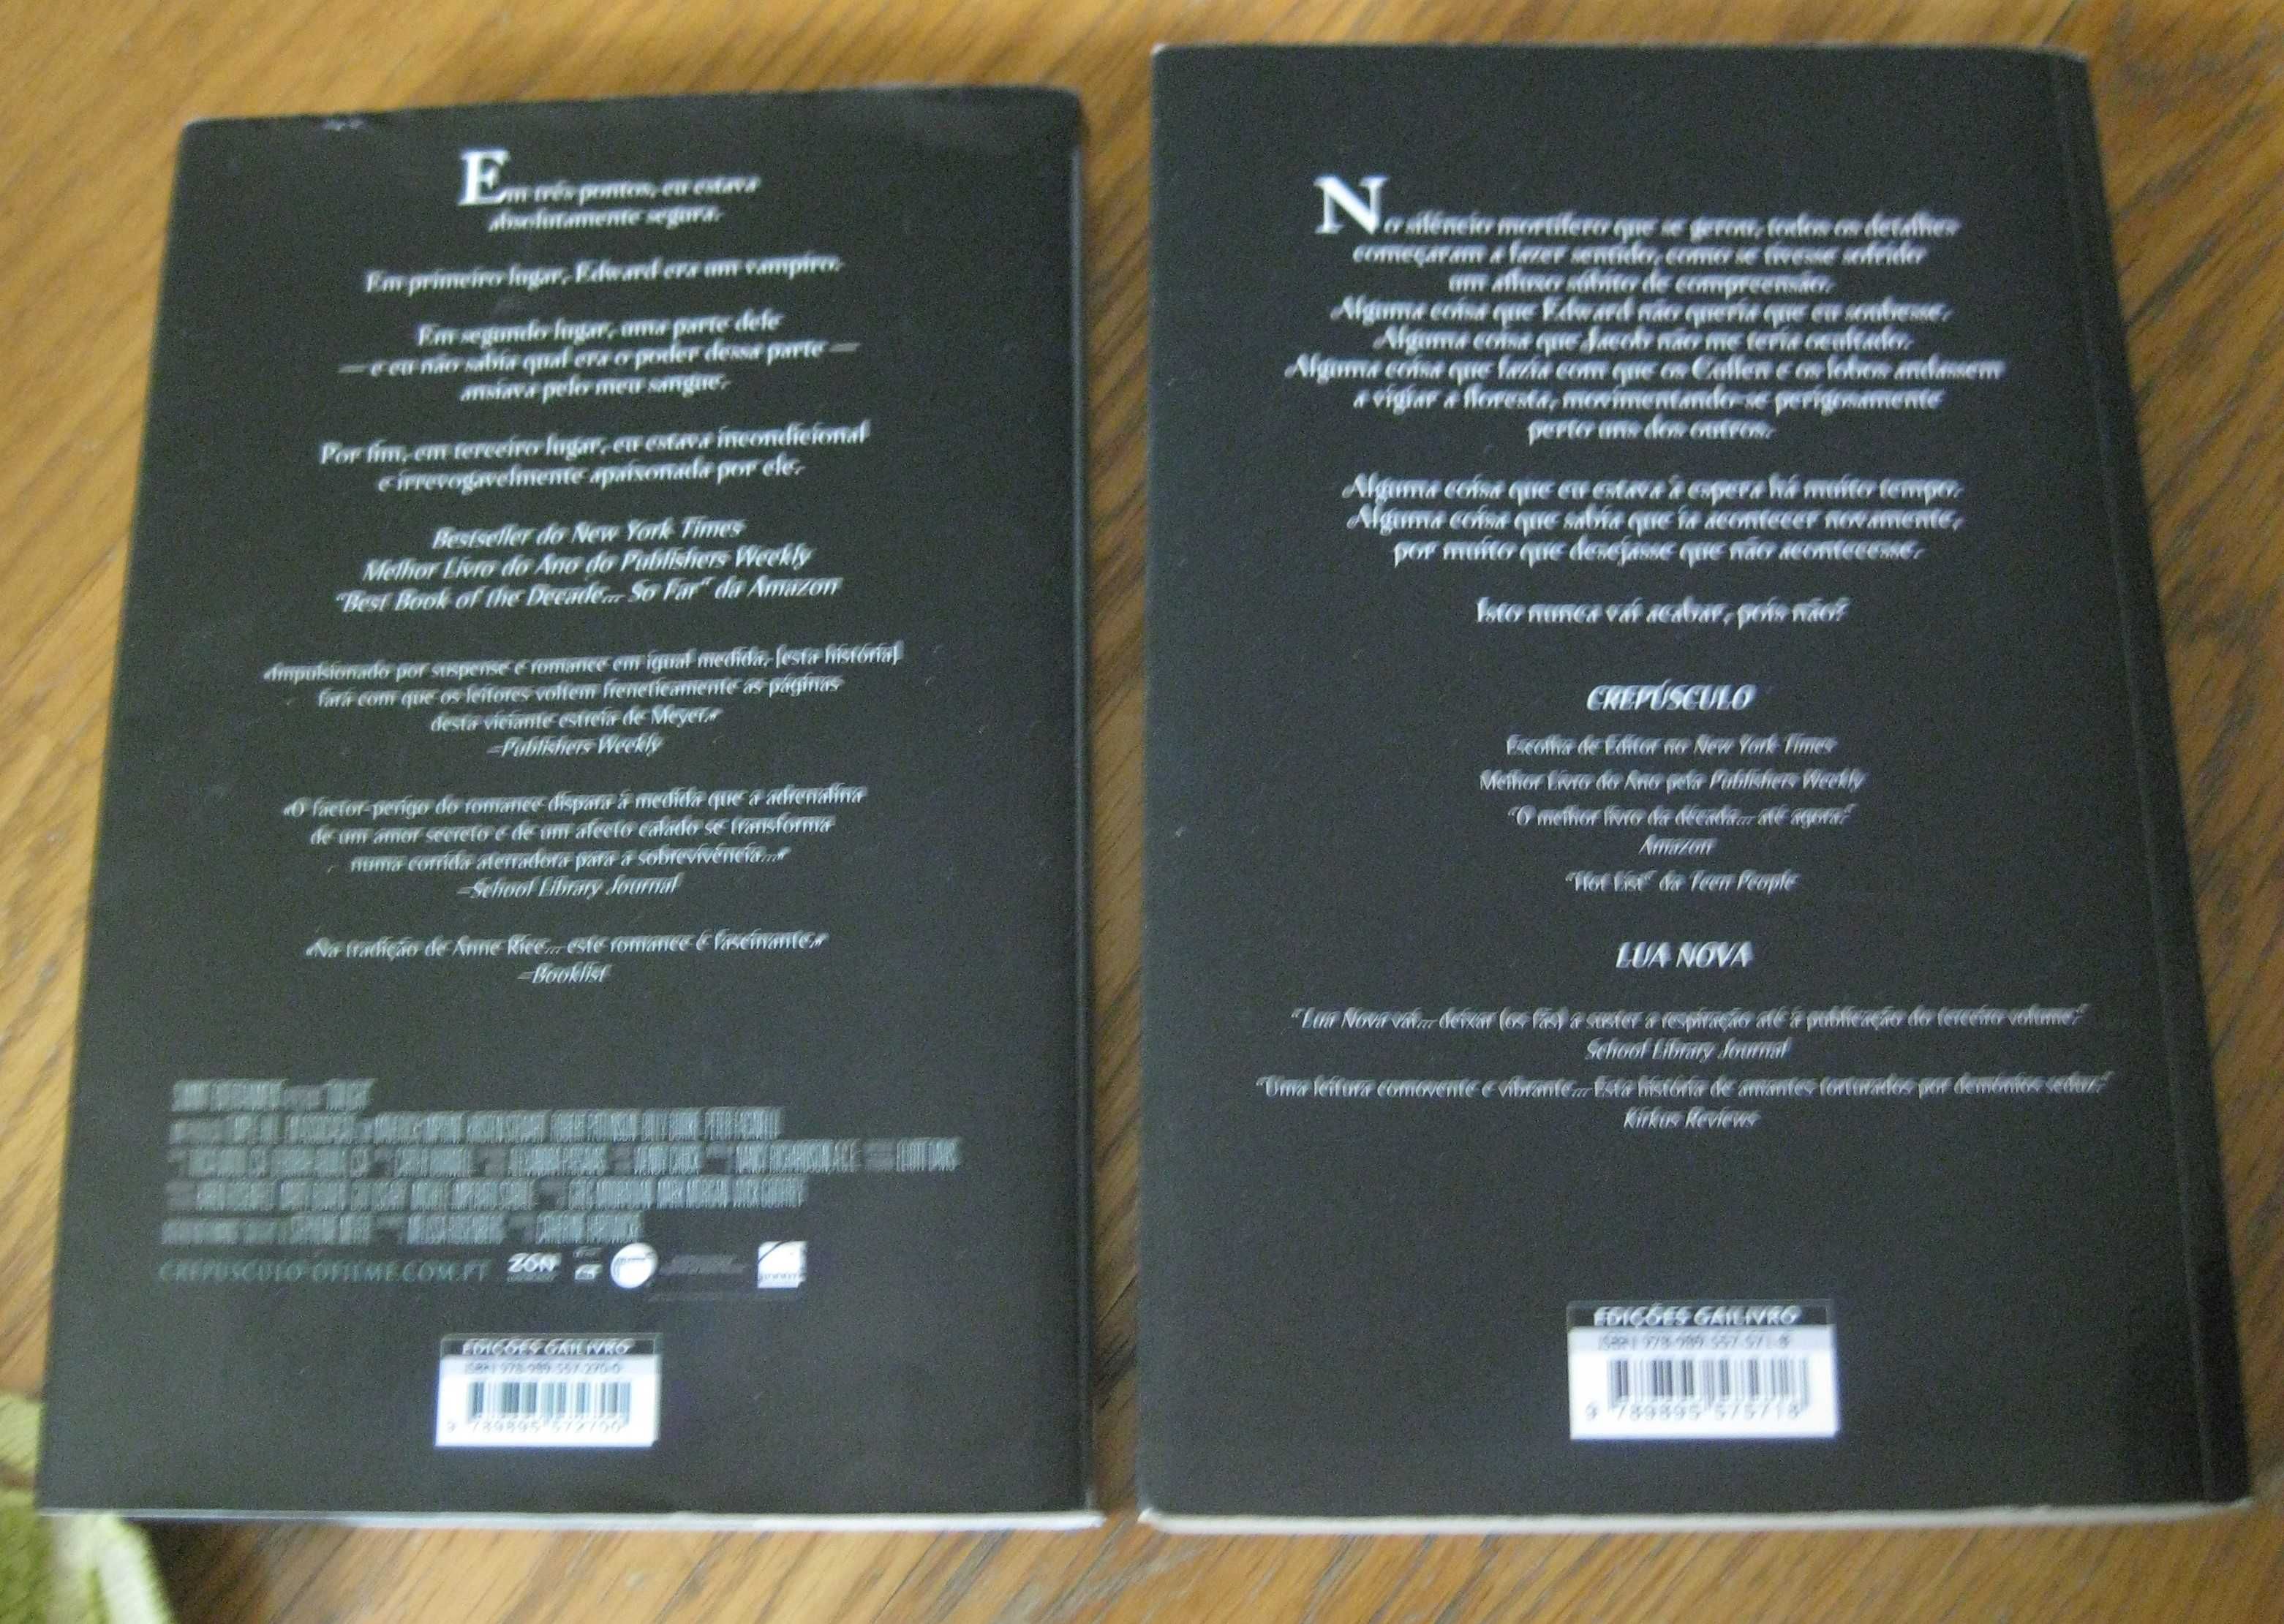 Saga Twilight de Stephenie Meyer - 4 Volumes - Oferta CTT Expresso